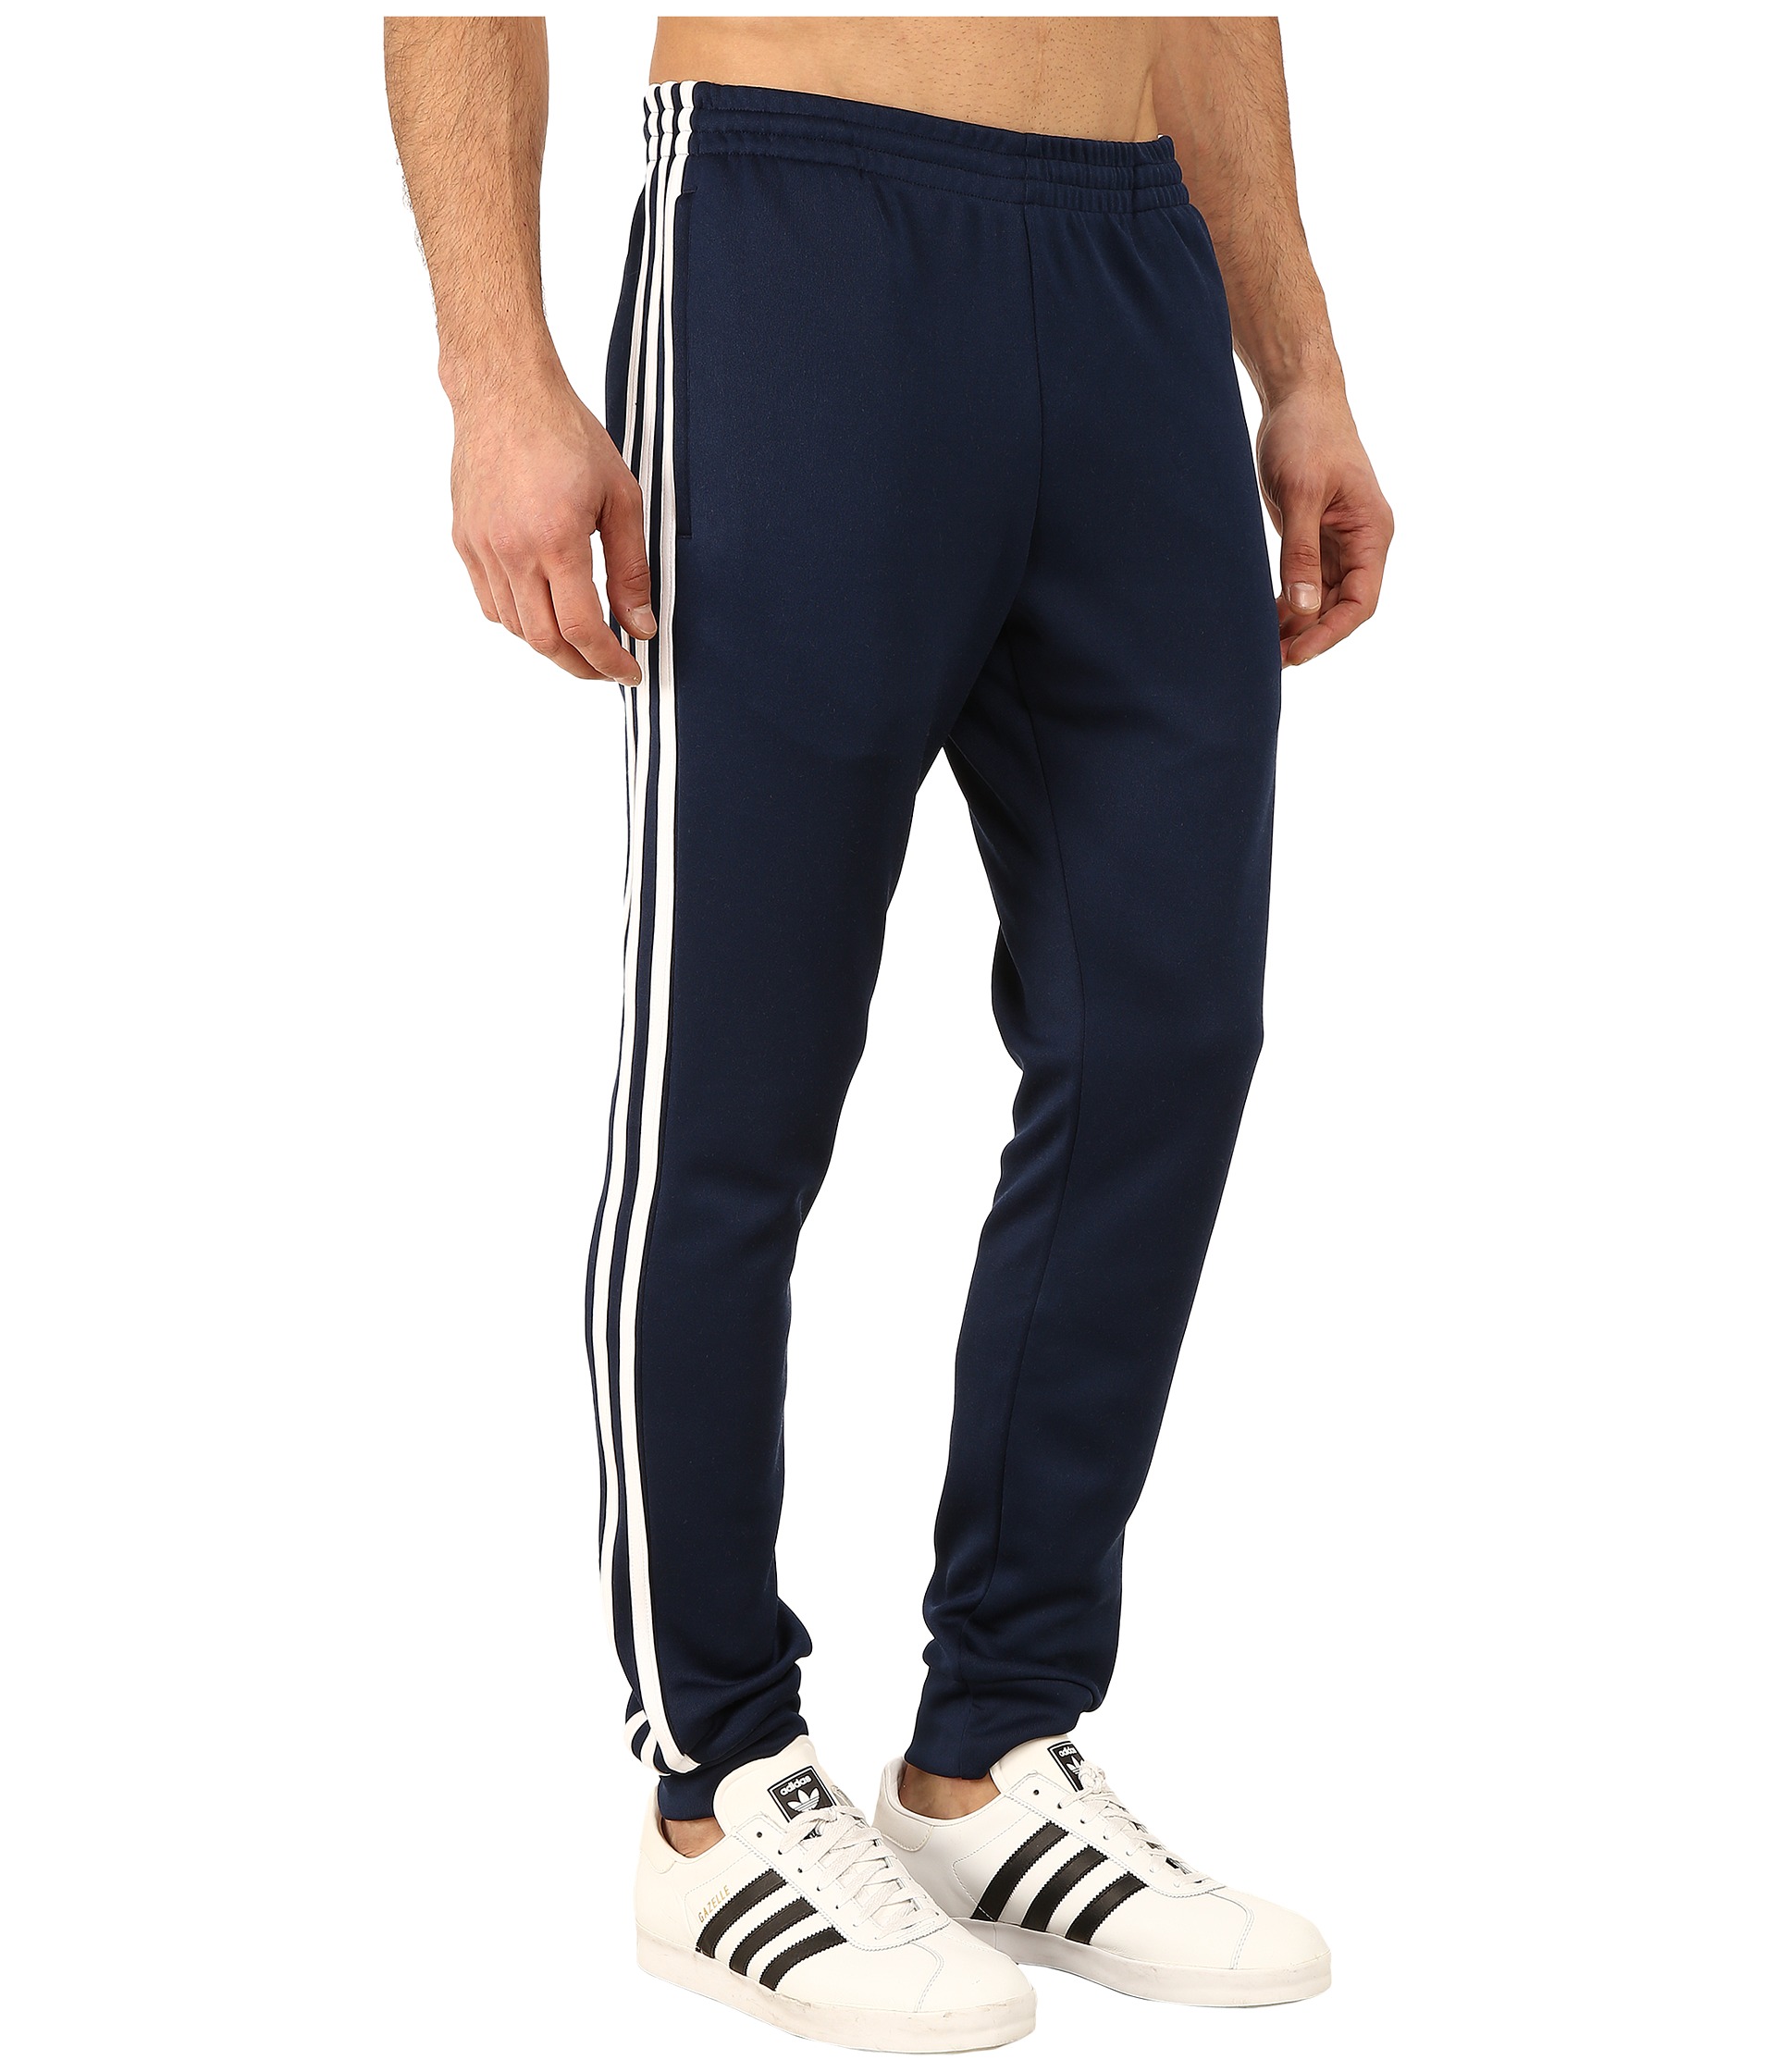 Adidas Originals Superstar Cuffed Track Pants Collegiate Navy White